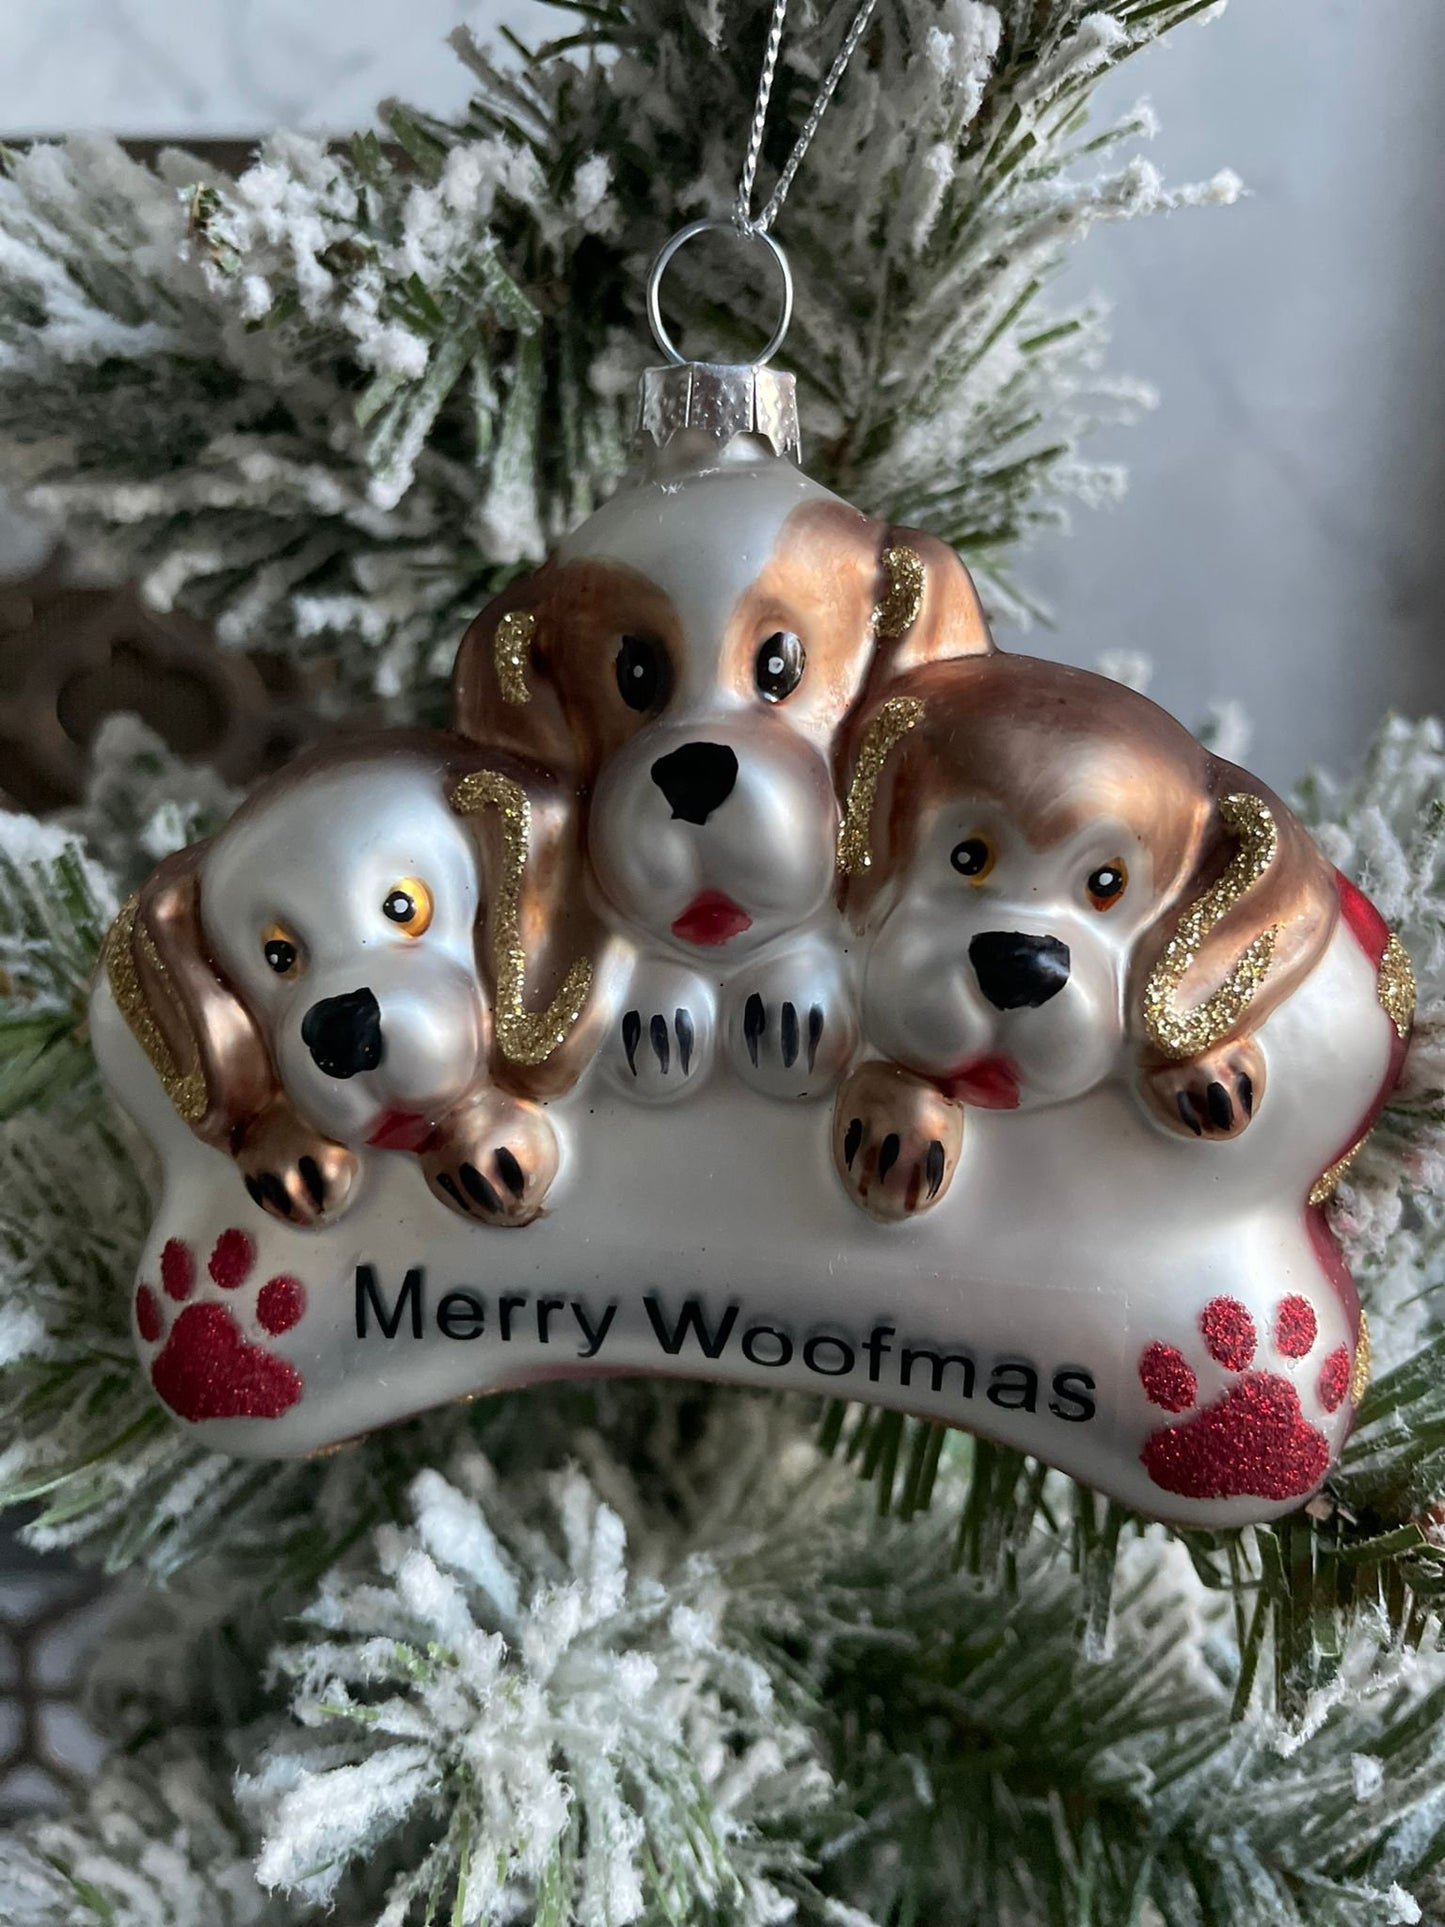 4" glass dogs "merry woofmas" bone ornament.